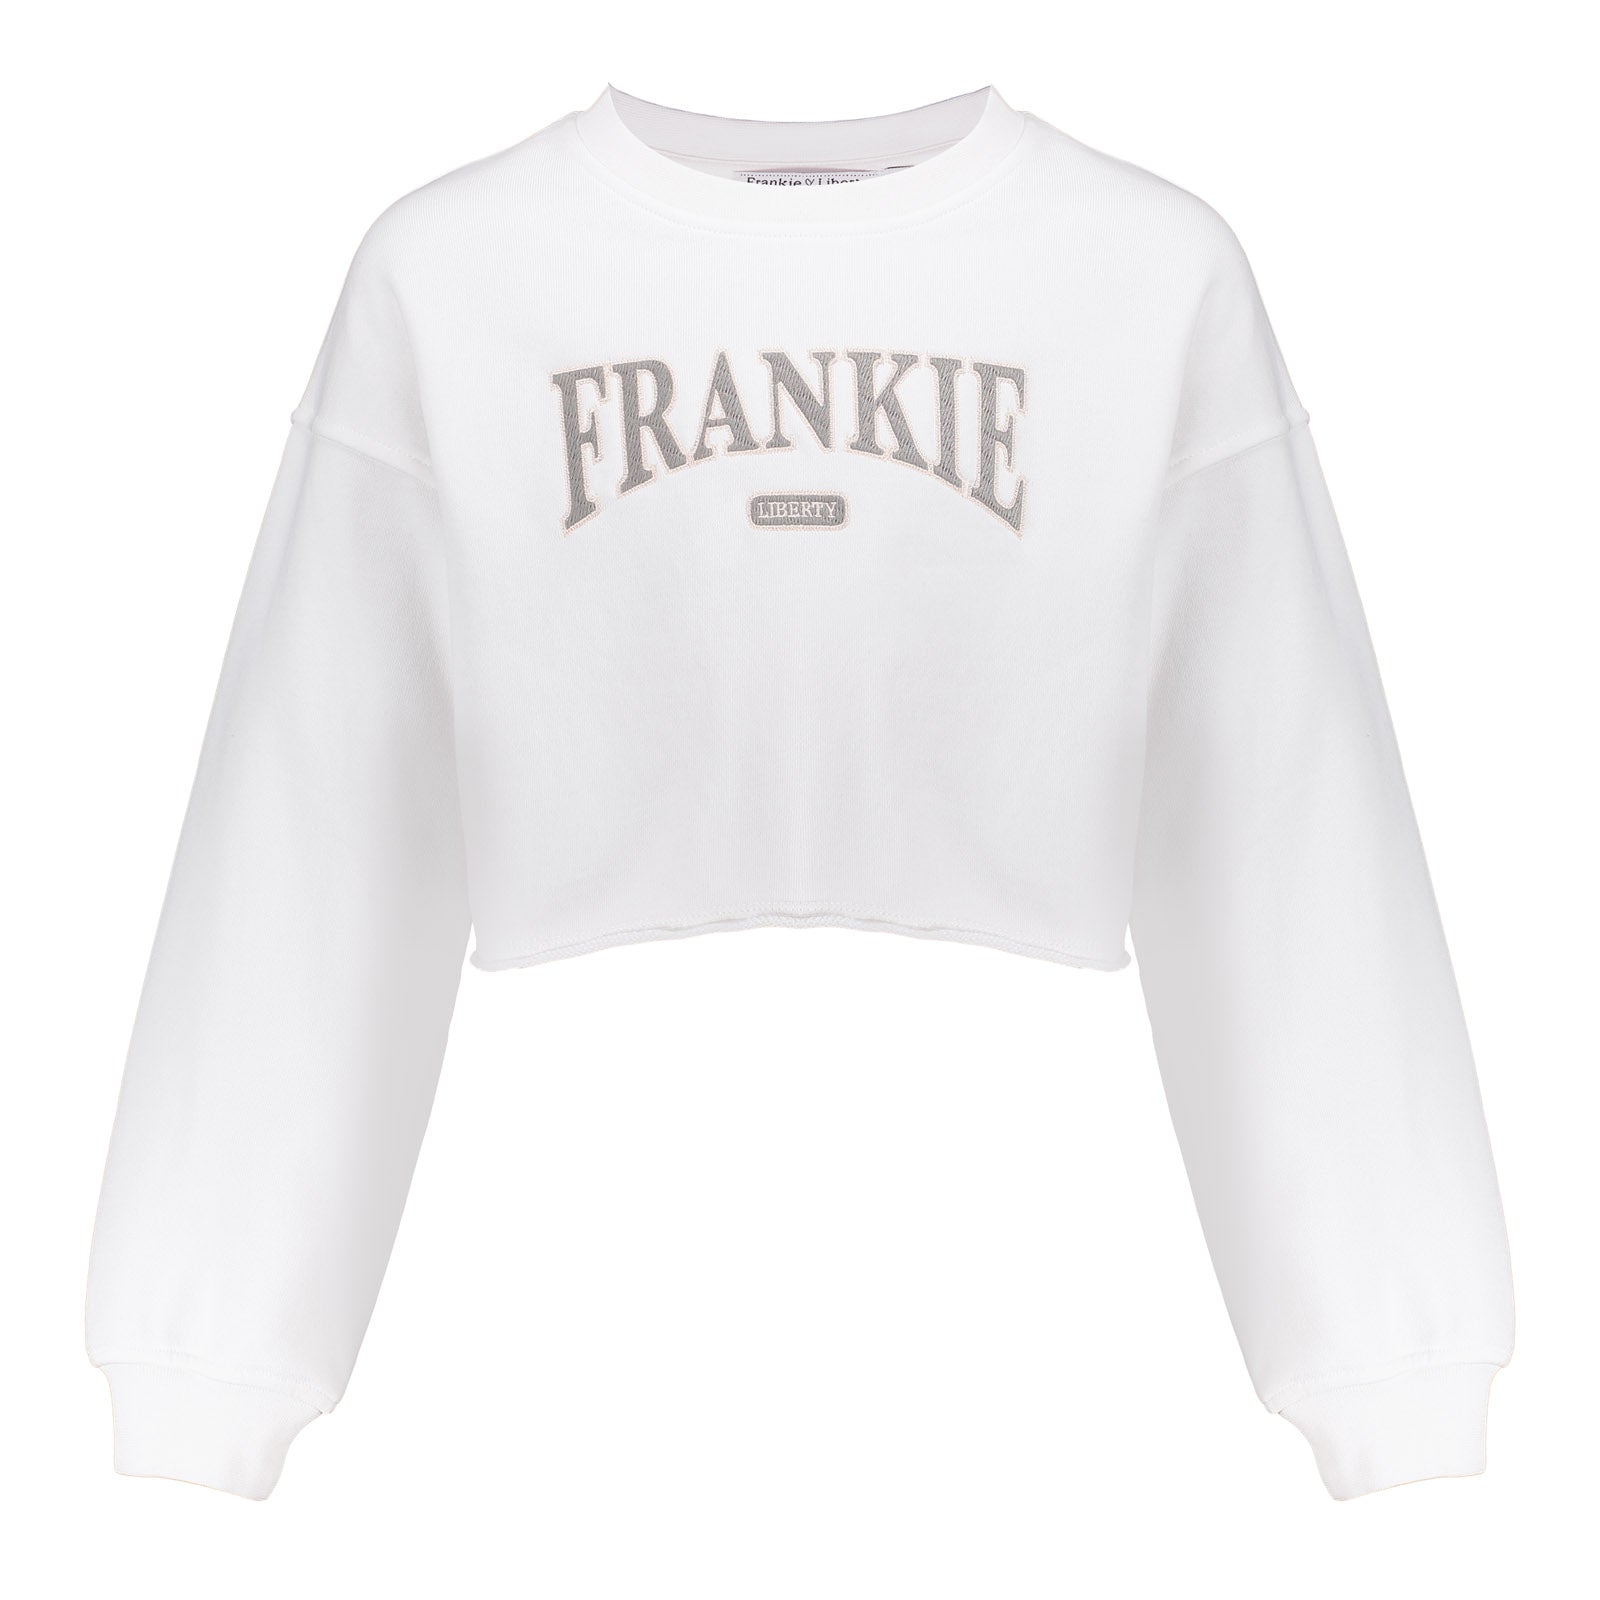 Frankie & Liberty Margot Sweater B